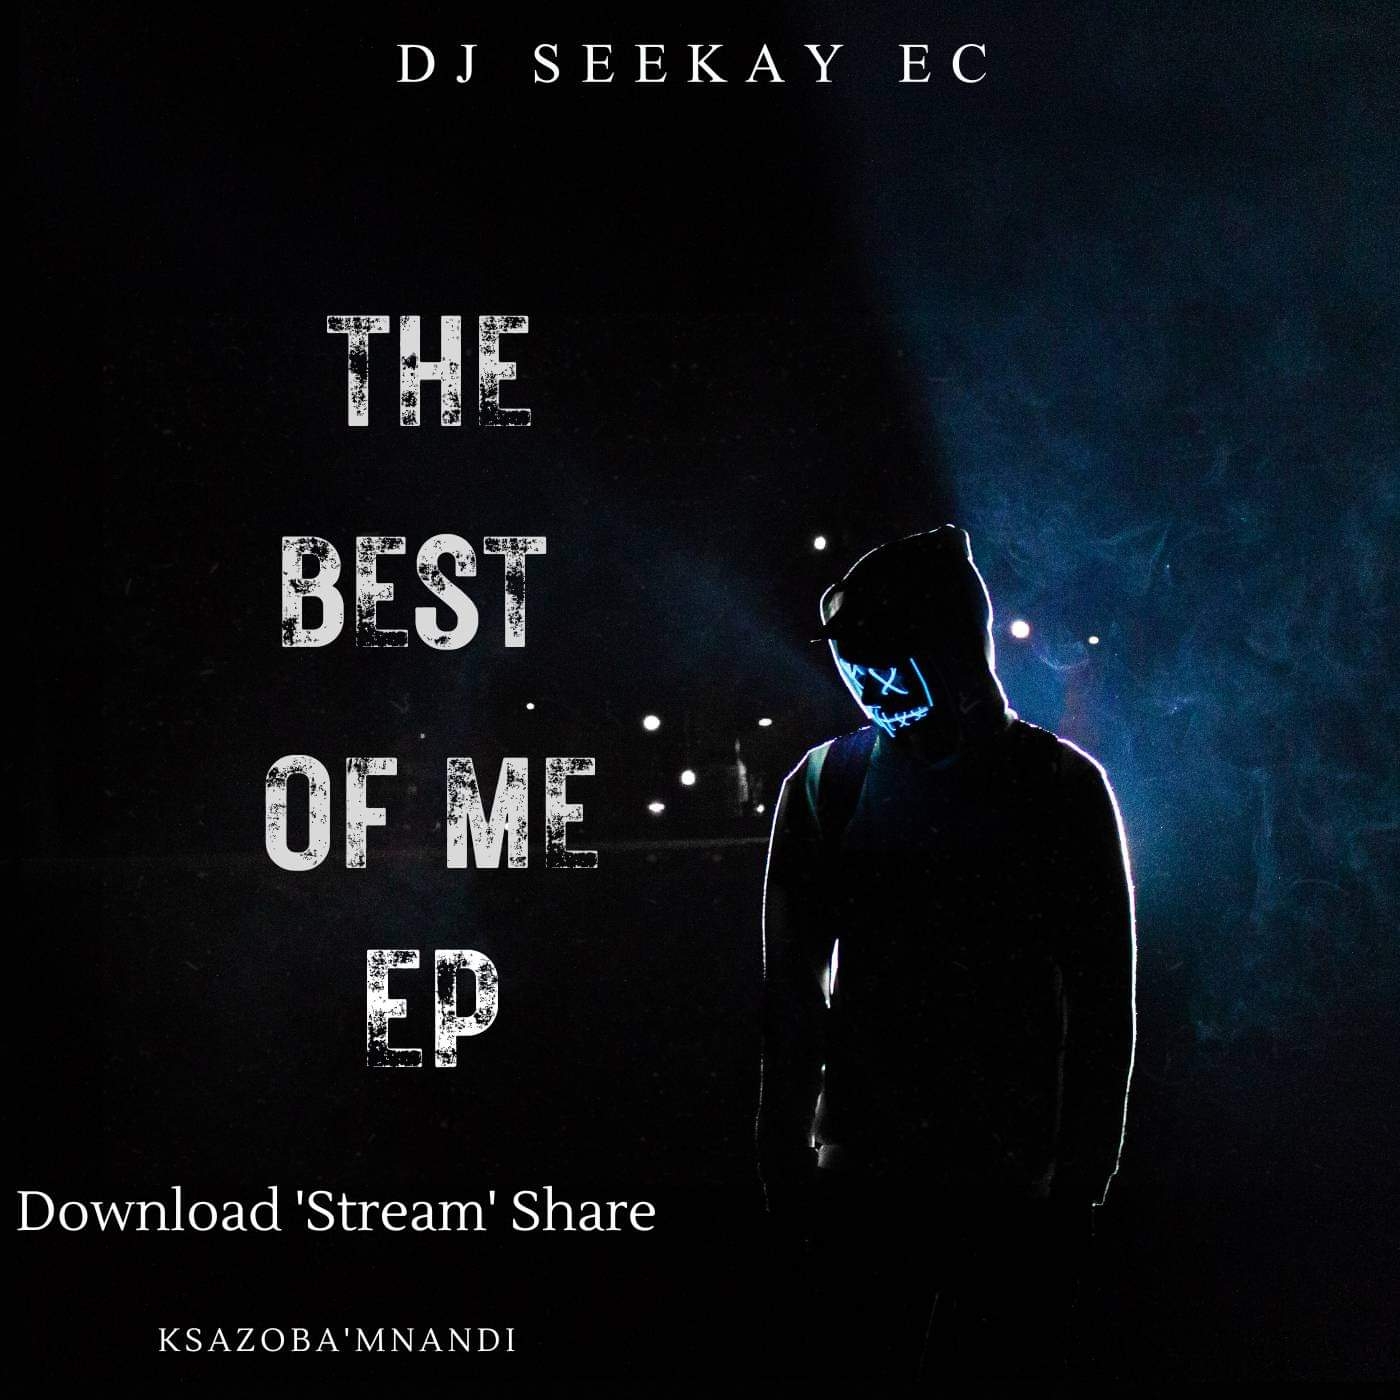 Best Of Me - Seekay EC